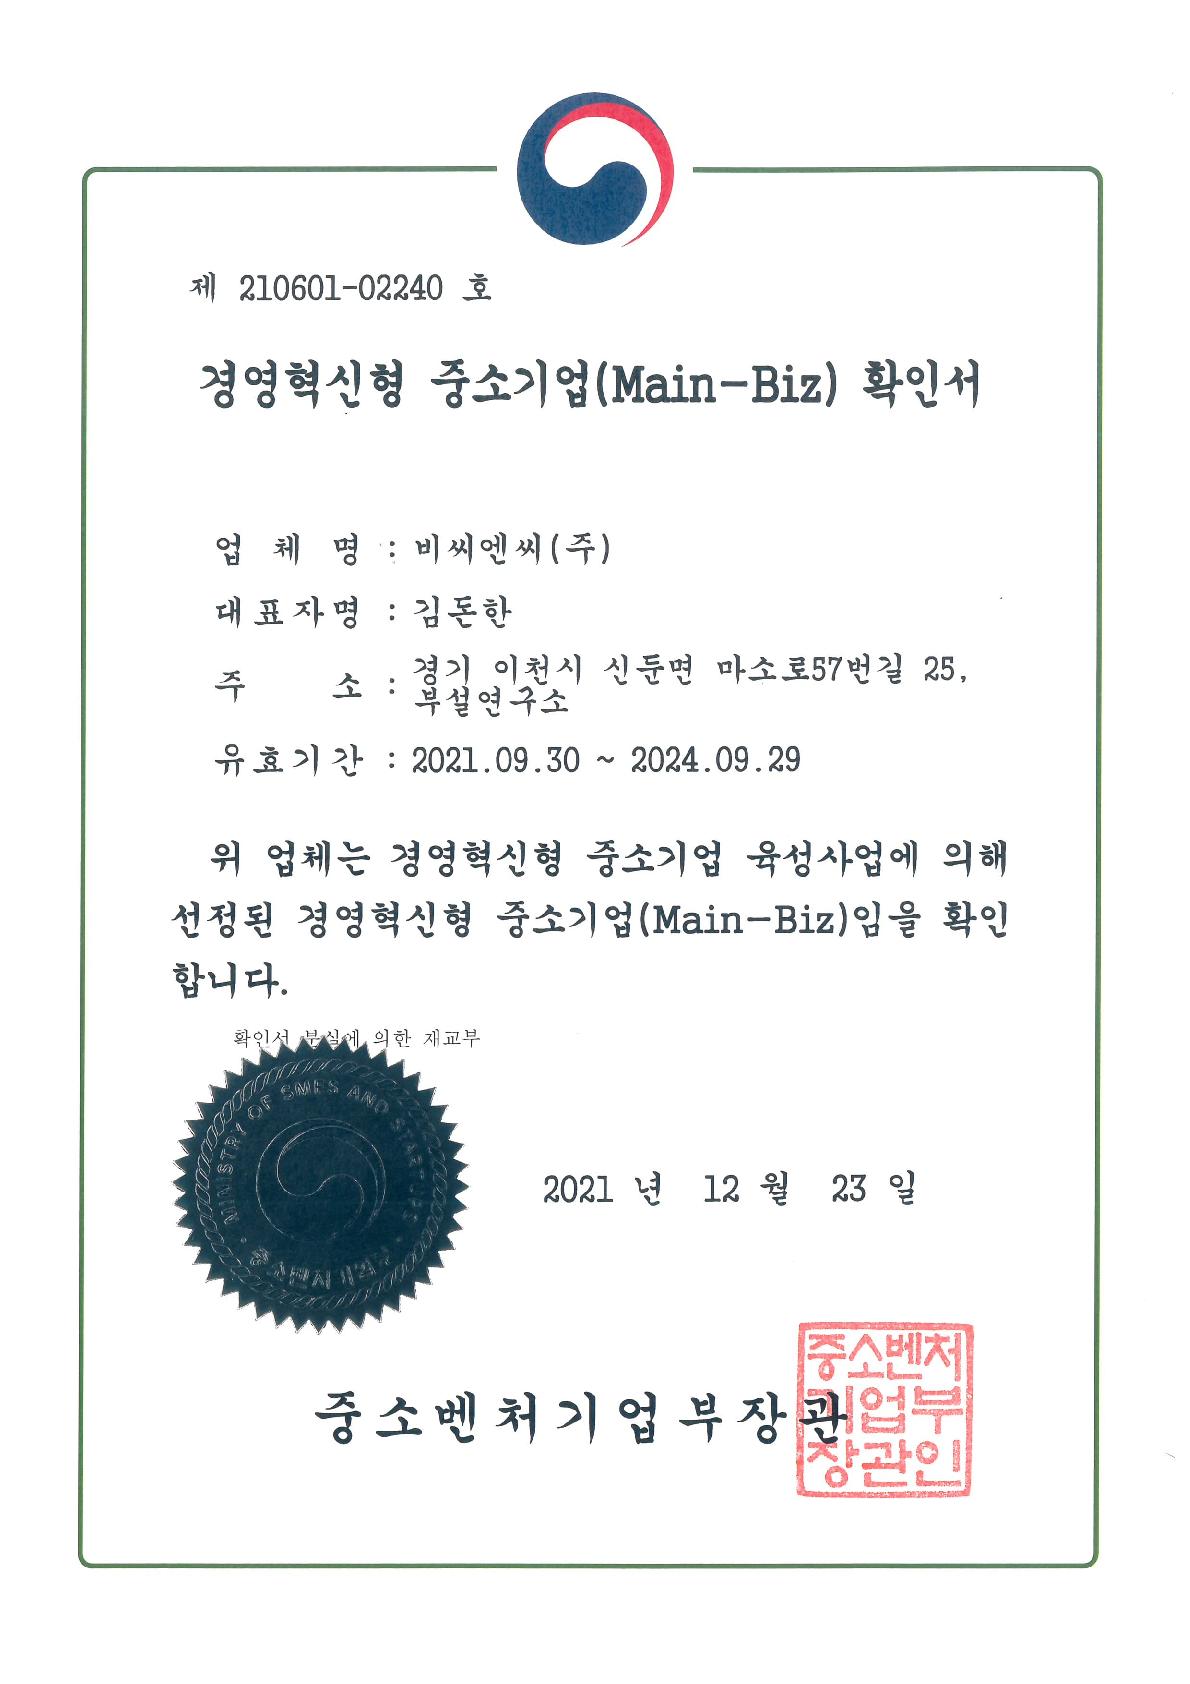 Main-Biz Certification 이미지